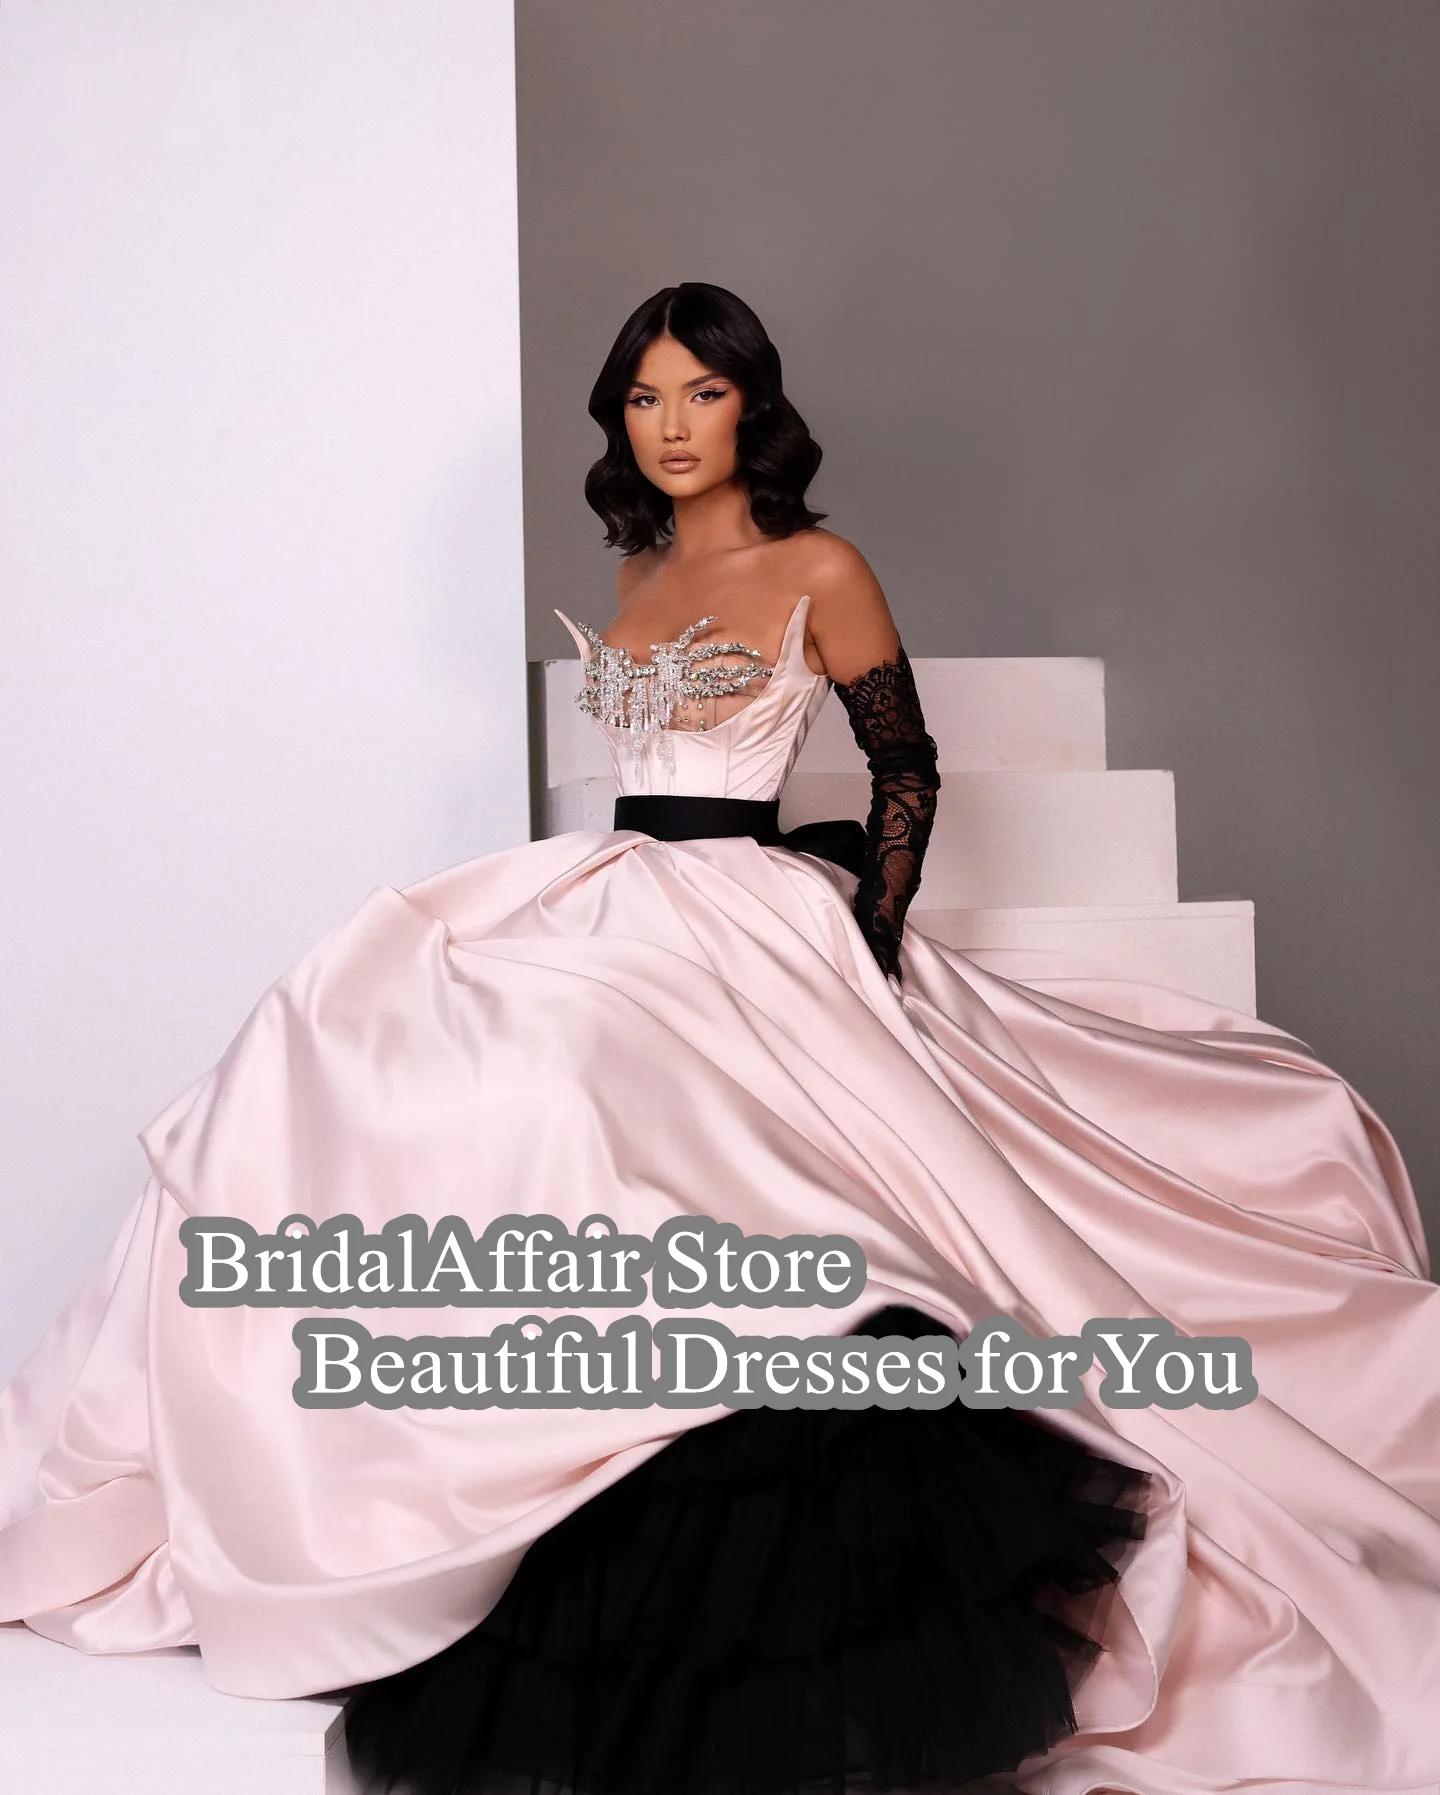 BridalAffair Blush Pink Evening DressOff Shoulder Diamond Black Belt A-Line Prom Gown Crystals Saudi Arabia Celebrity Party Gown